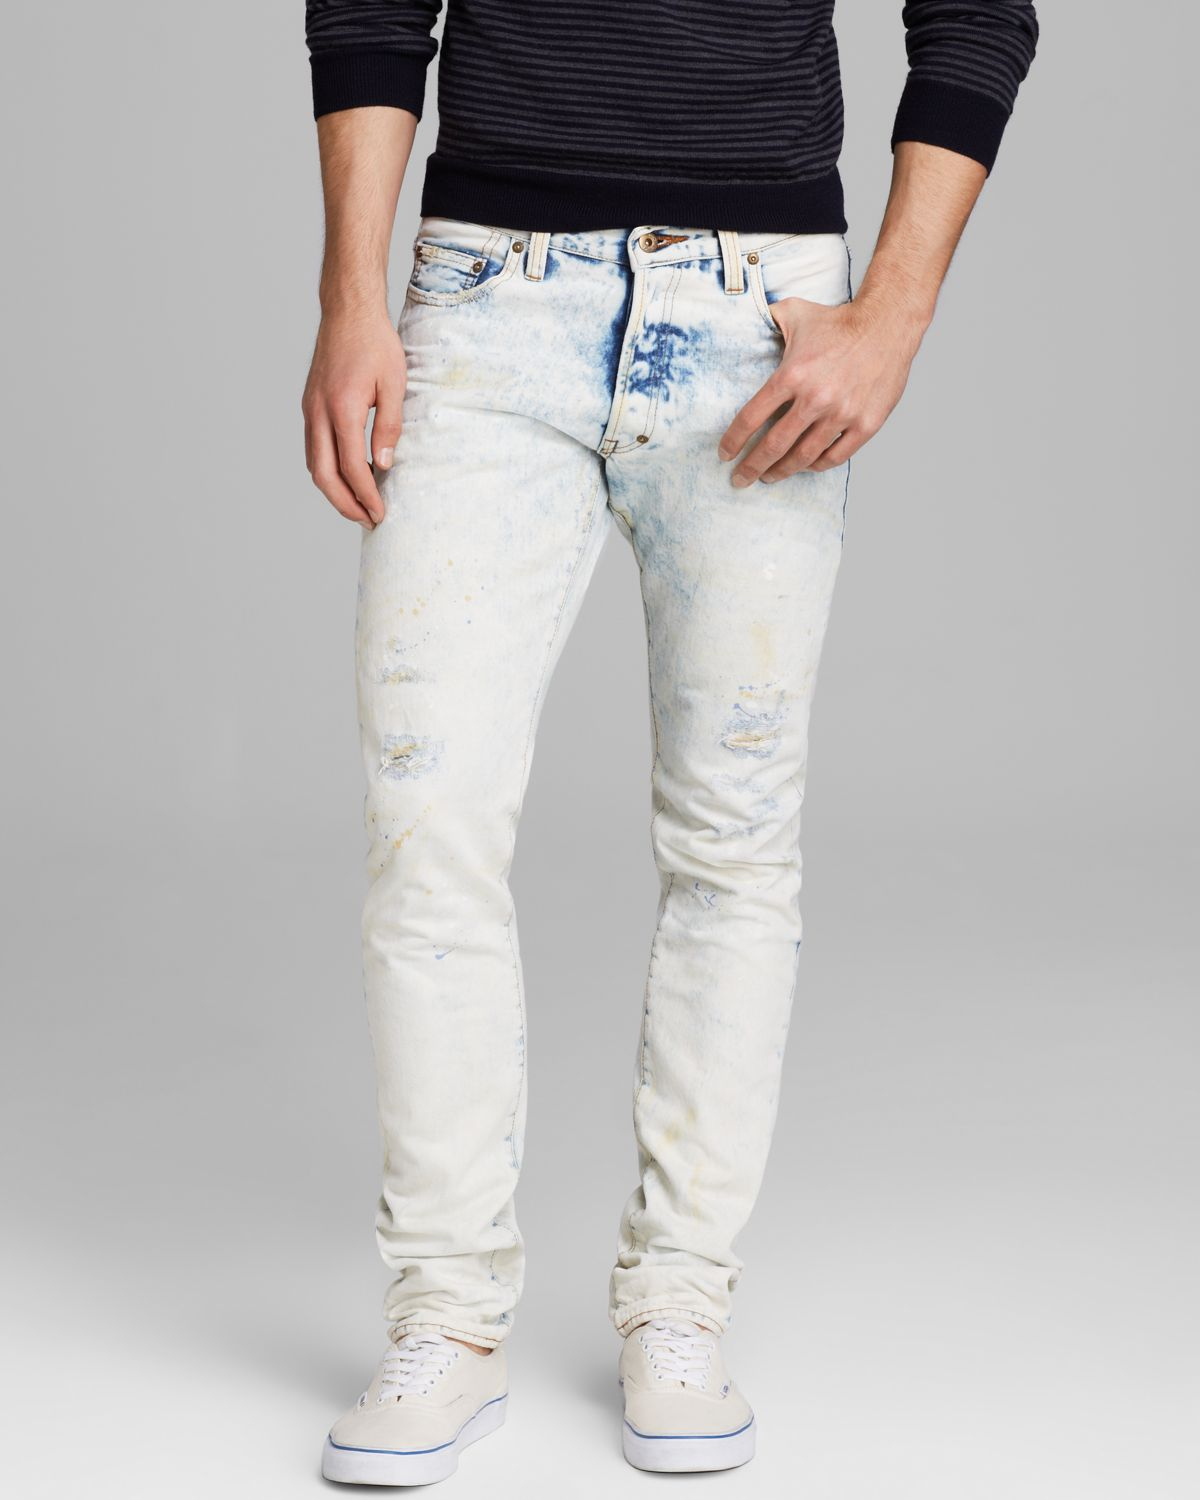 white wash jeans mens